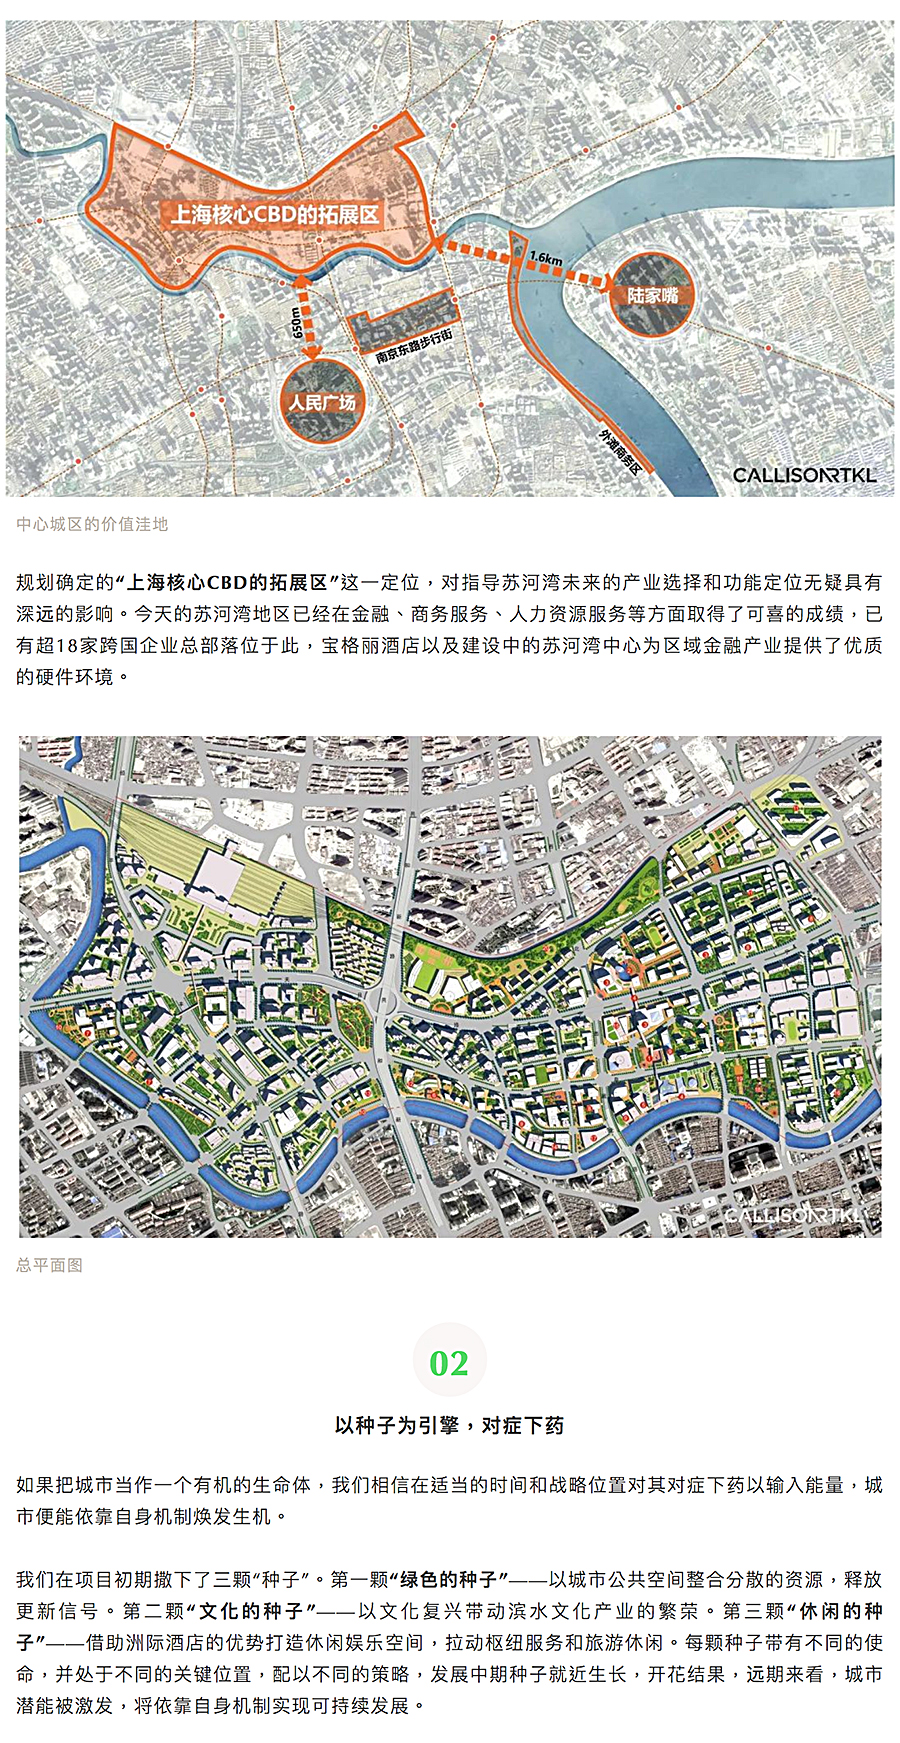 Renewal-Zone：塑造我们的城市-_-《城市更新优秀案例与评析》收录作品—苏河湾地区城市设计_0003_图层-4.jpg